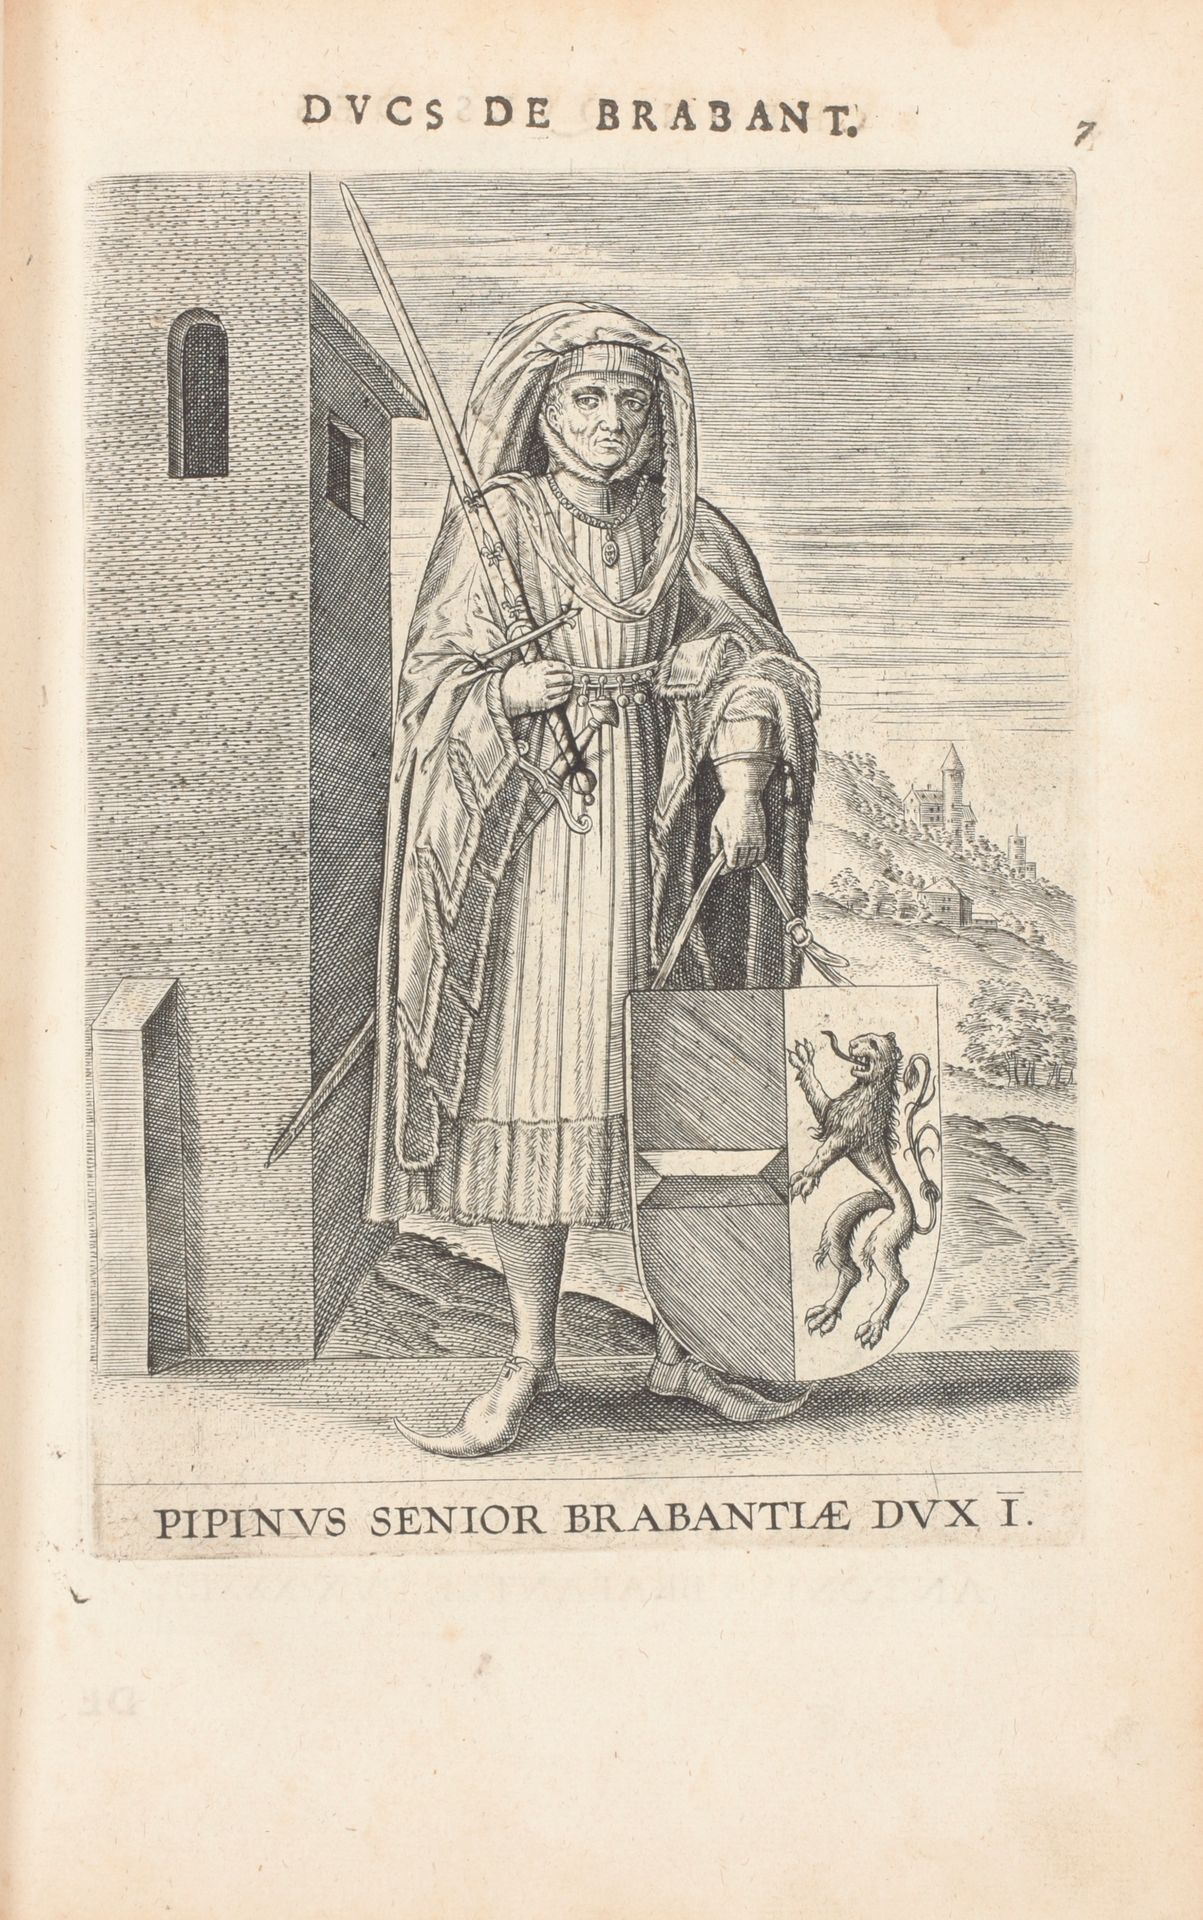 BARLANDUS, Hadrianus 布拉邦特公爵的编年史

安特卫普
en la Boutique Plantinienne
1612

3部分合为1卷，&hellip;